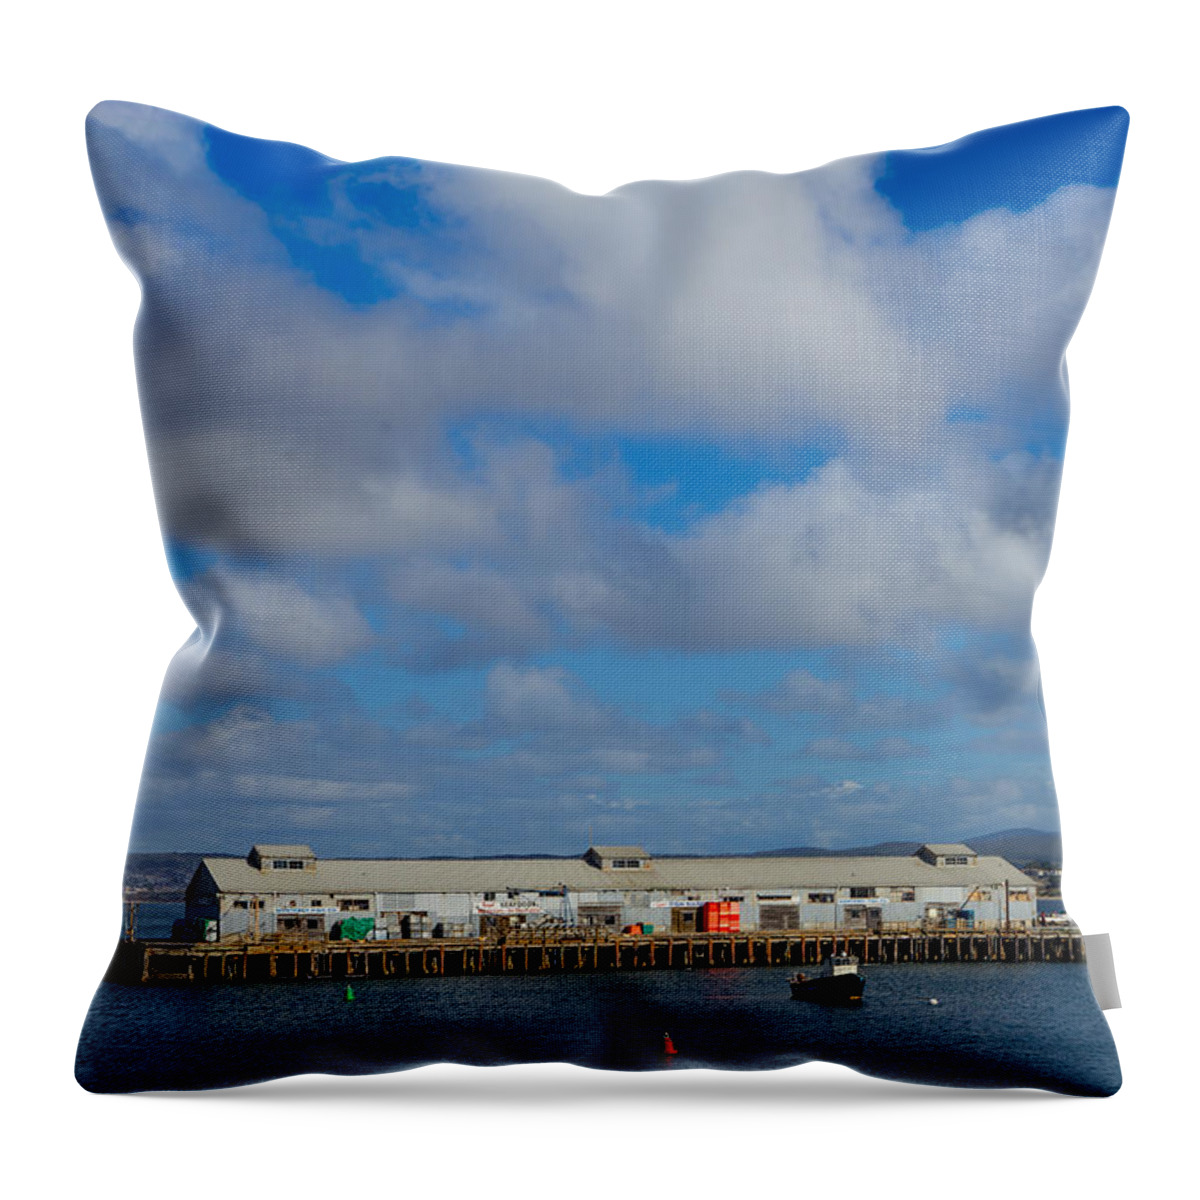 Monterey Commercial Wharf Throw Pillow featuring the photograph Monterey Commercial Wharf #2 by Derek Dean